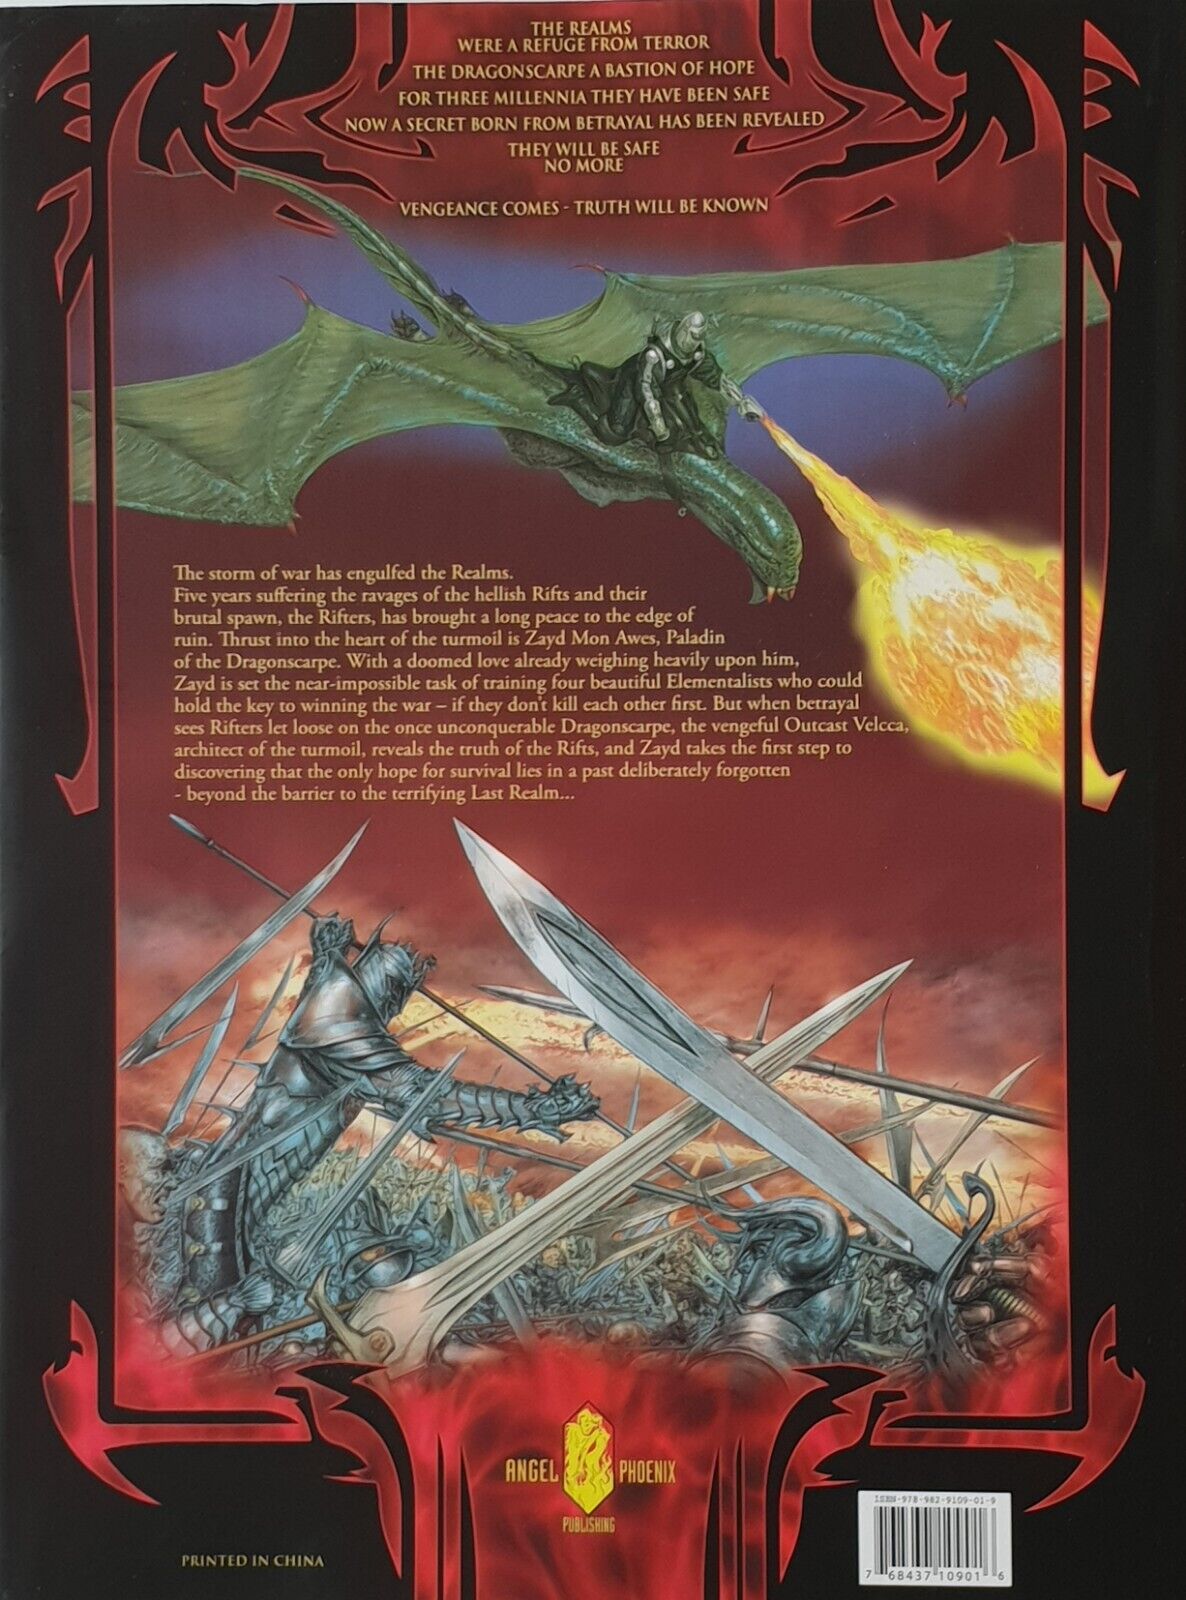 The Last Realm Book 1 Dragonscarpe Fantasy Adventure Illustrated Storybook - N3